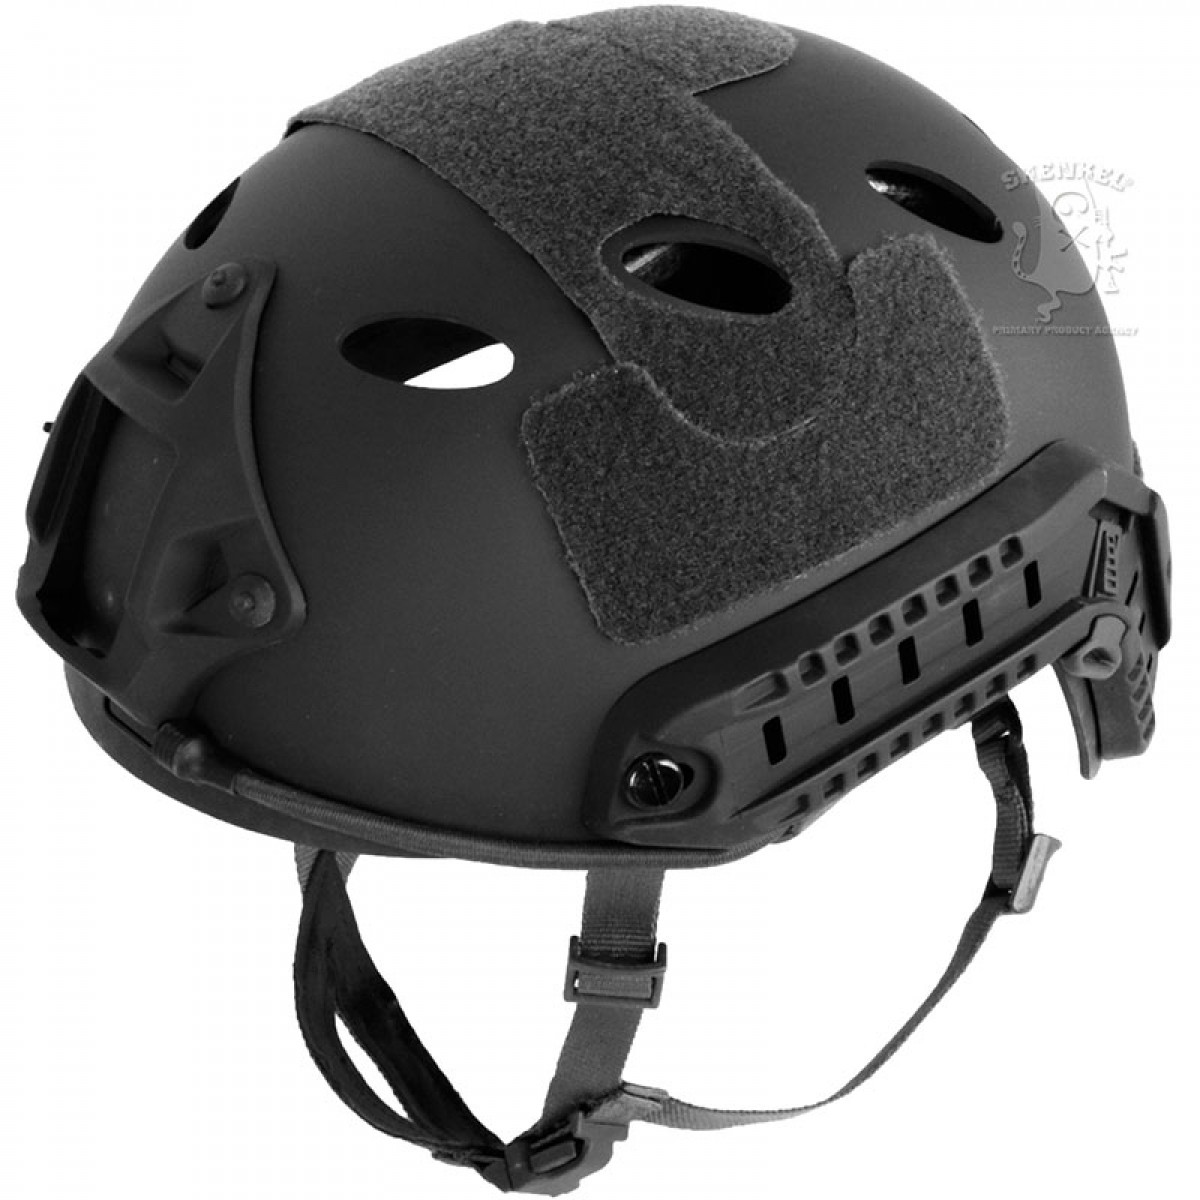 SHENKEL FAST HELMET ファストヘルメット PJタイプ 4点式あご紐ヘルメット  レプリカ 米軍装備 サバゲー BK/OD/TAN